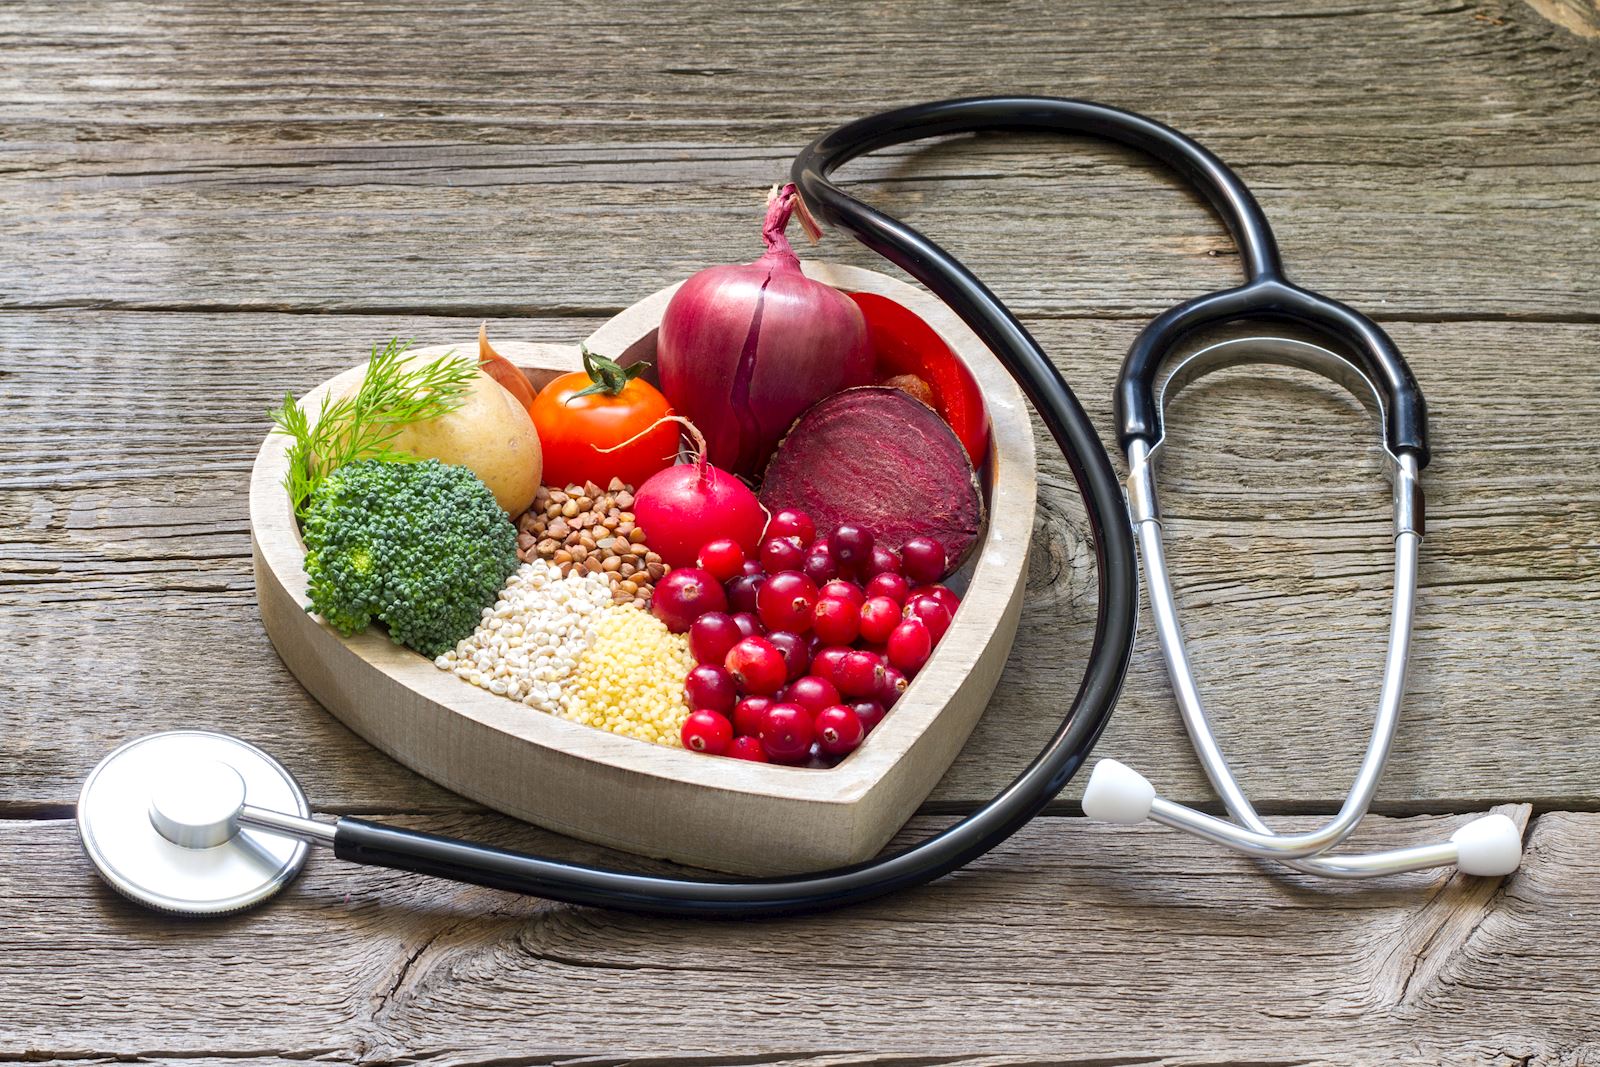 Health plans try a new prescription: Nutritious food